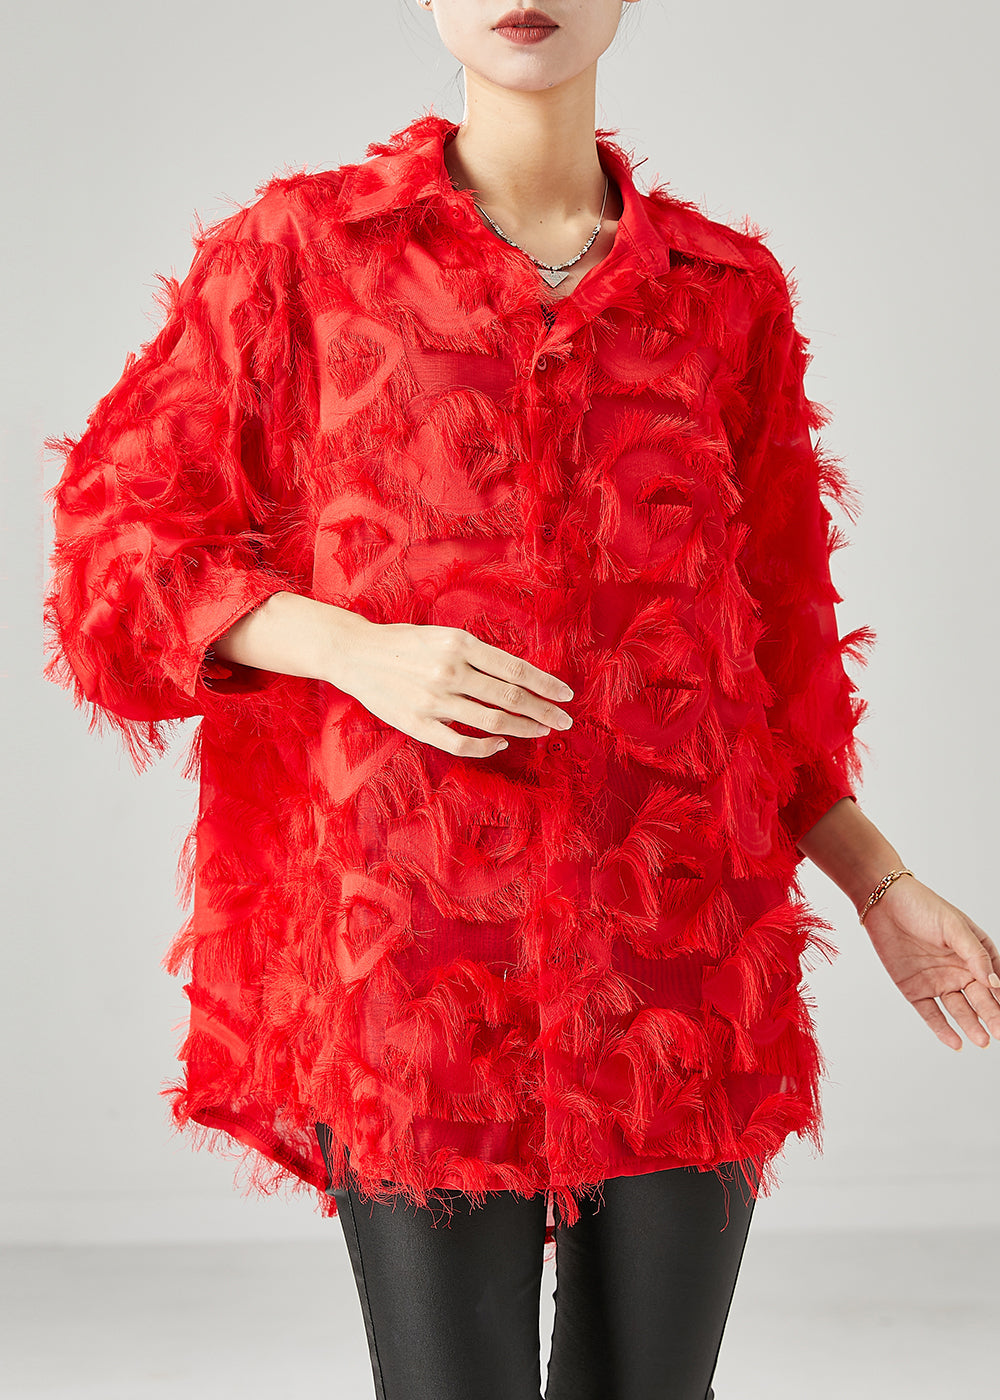 Bohemian Red Tasseled Cotton Shirt Top Spring